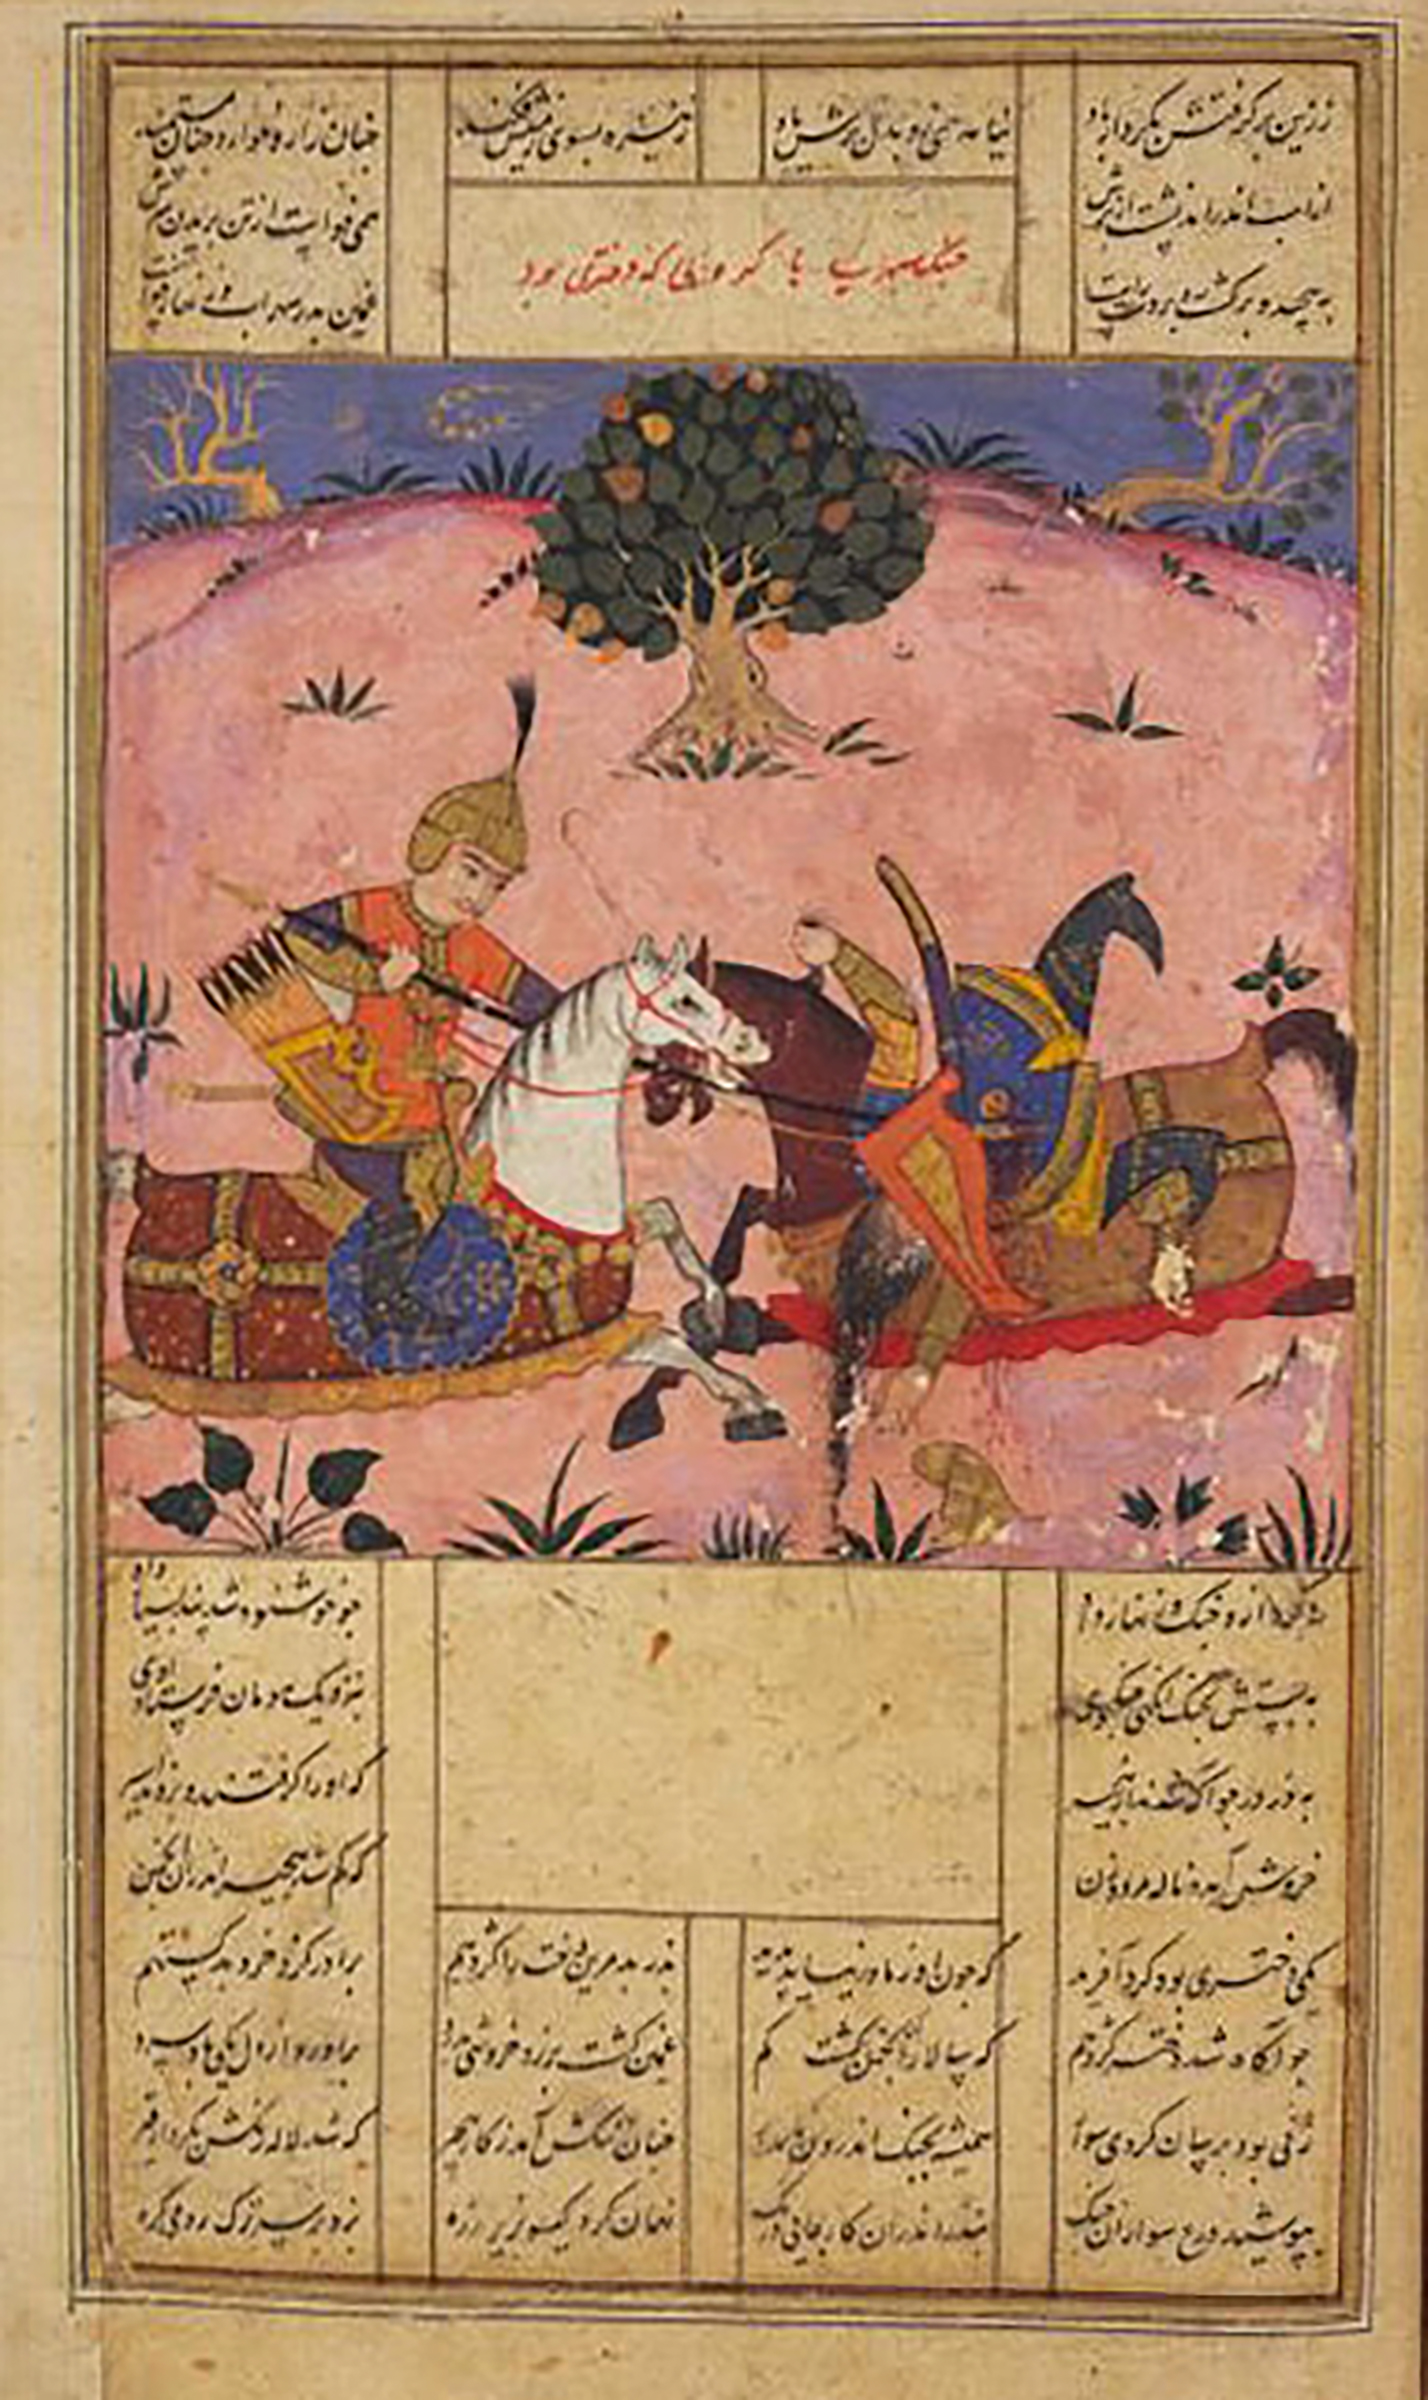 Gordafarid fights Sohrab in the Shahnamehor, “Book of Kings.” (Public Domain)